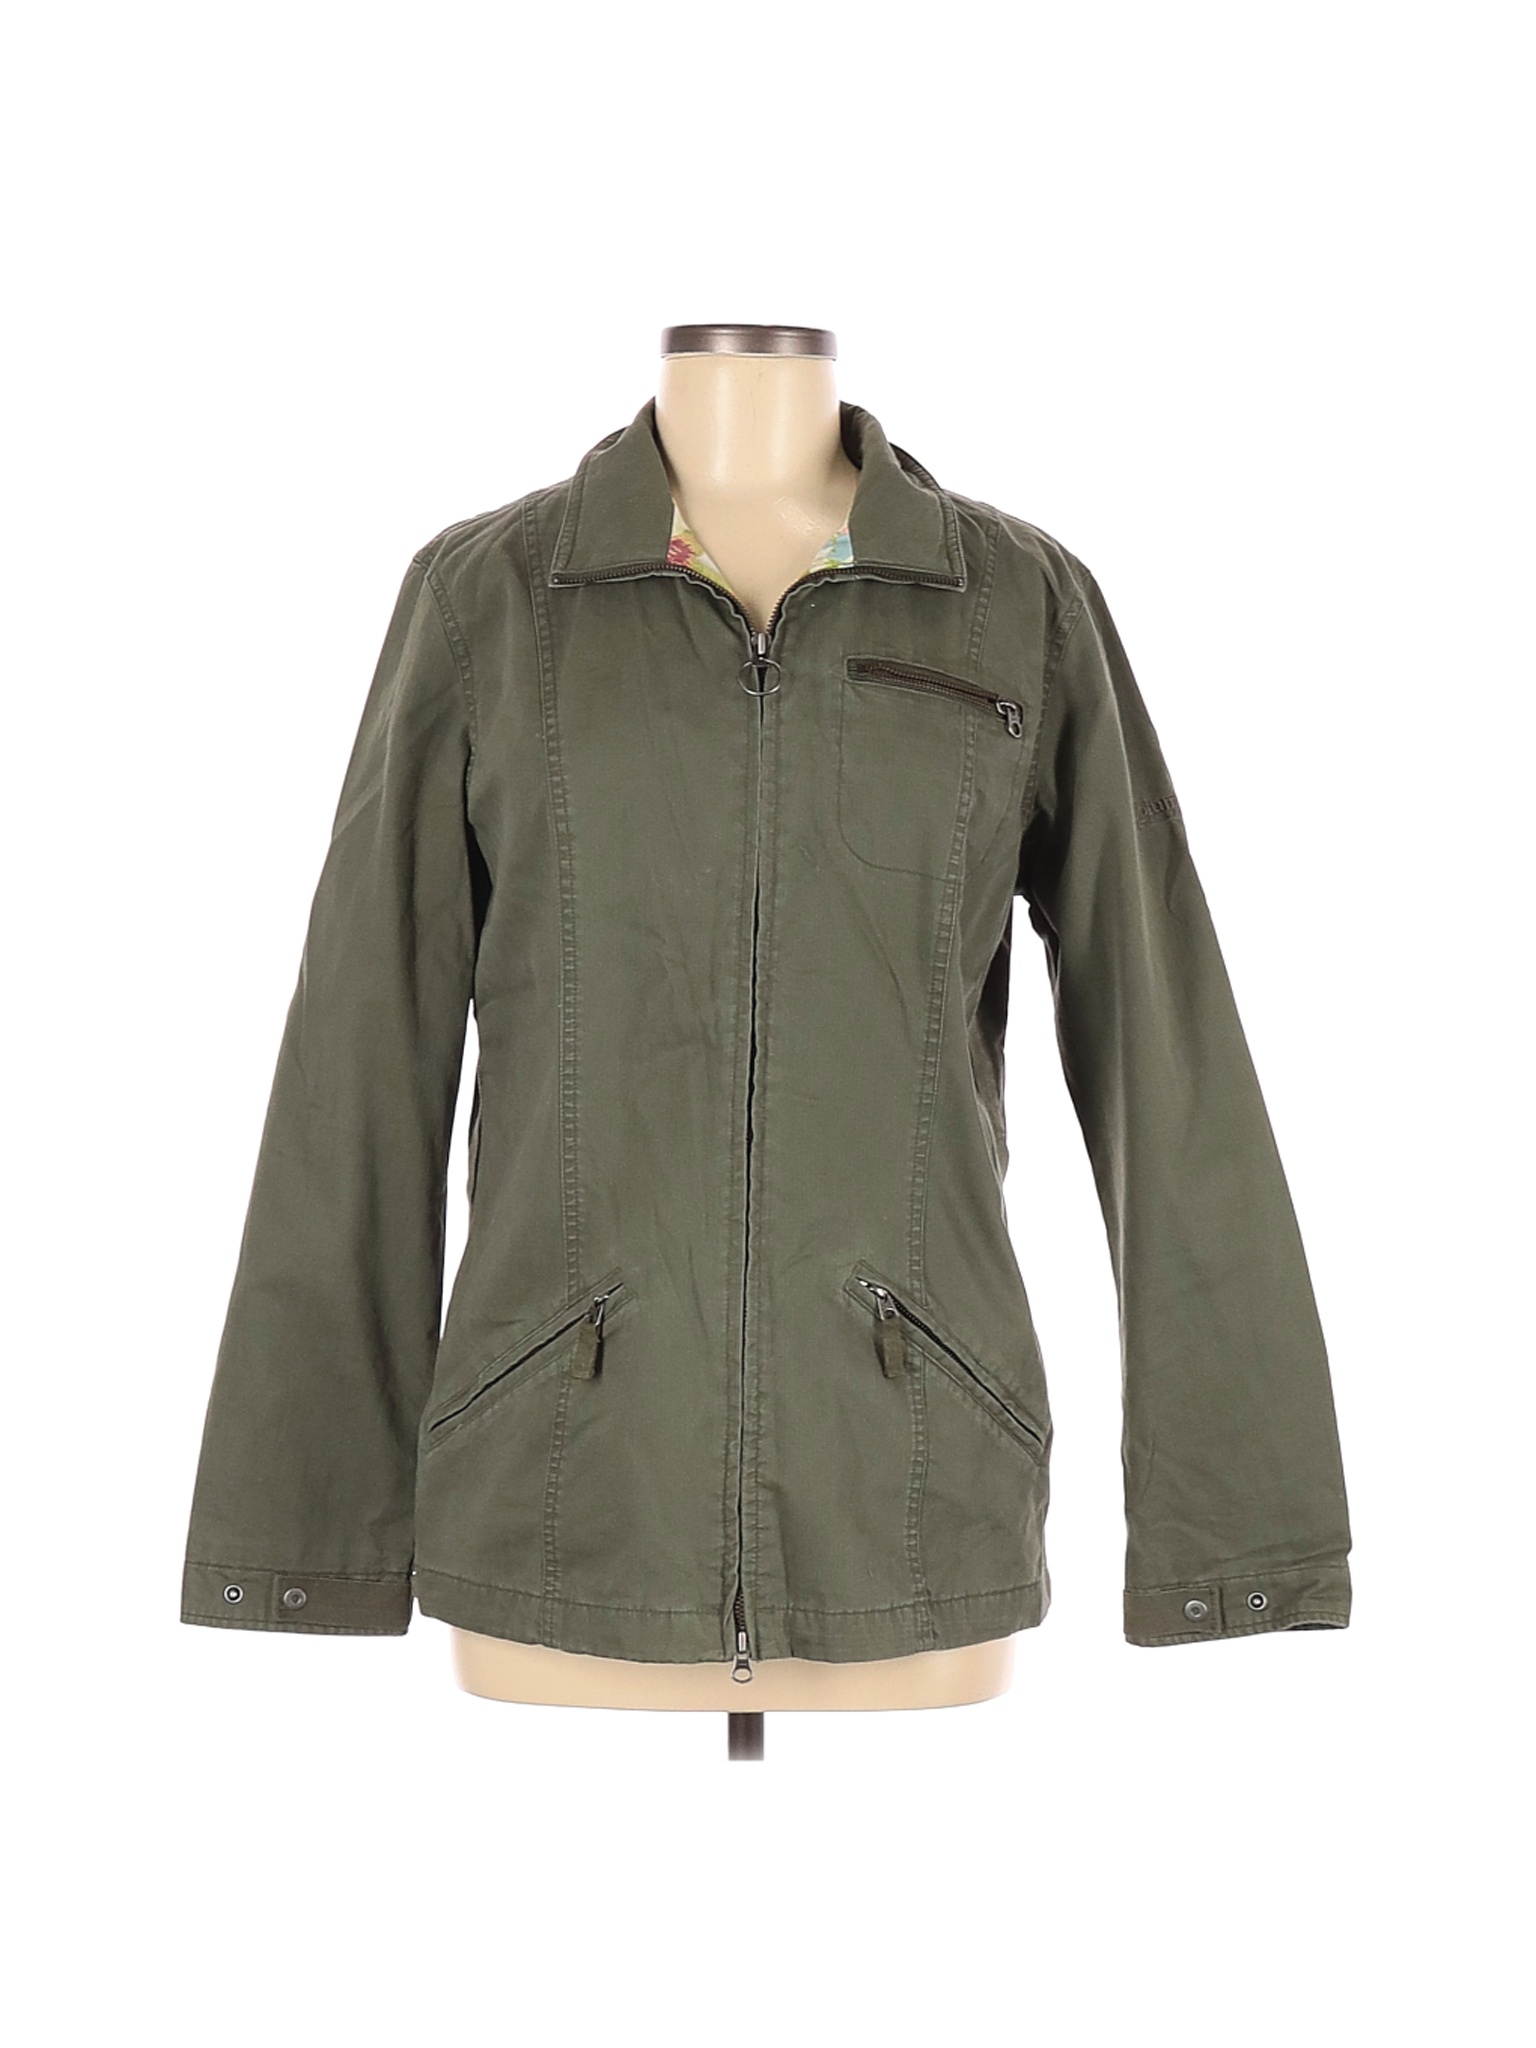 Columbia Women Green Jacket M | eBay